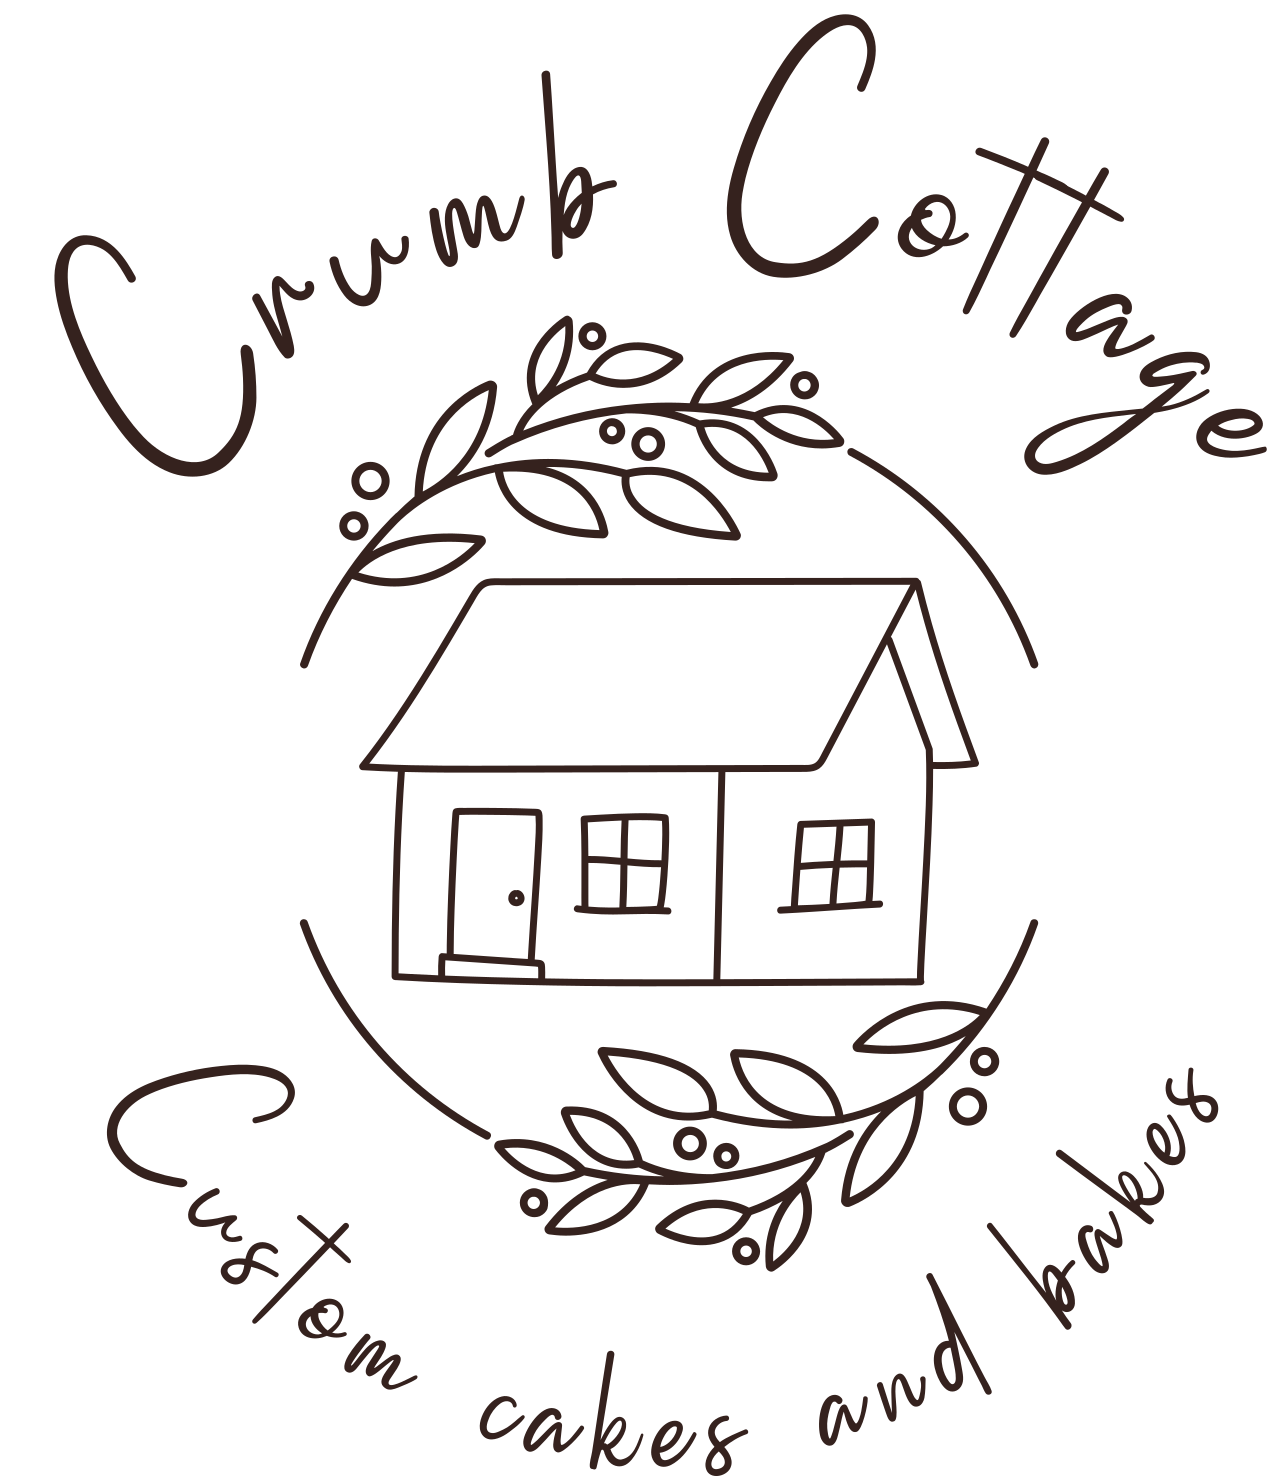 Crumb Cottage's logo